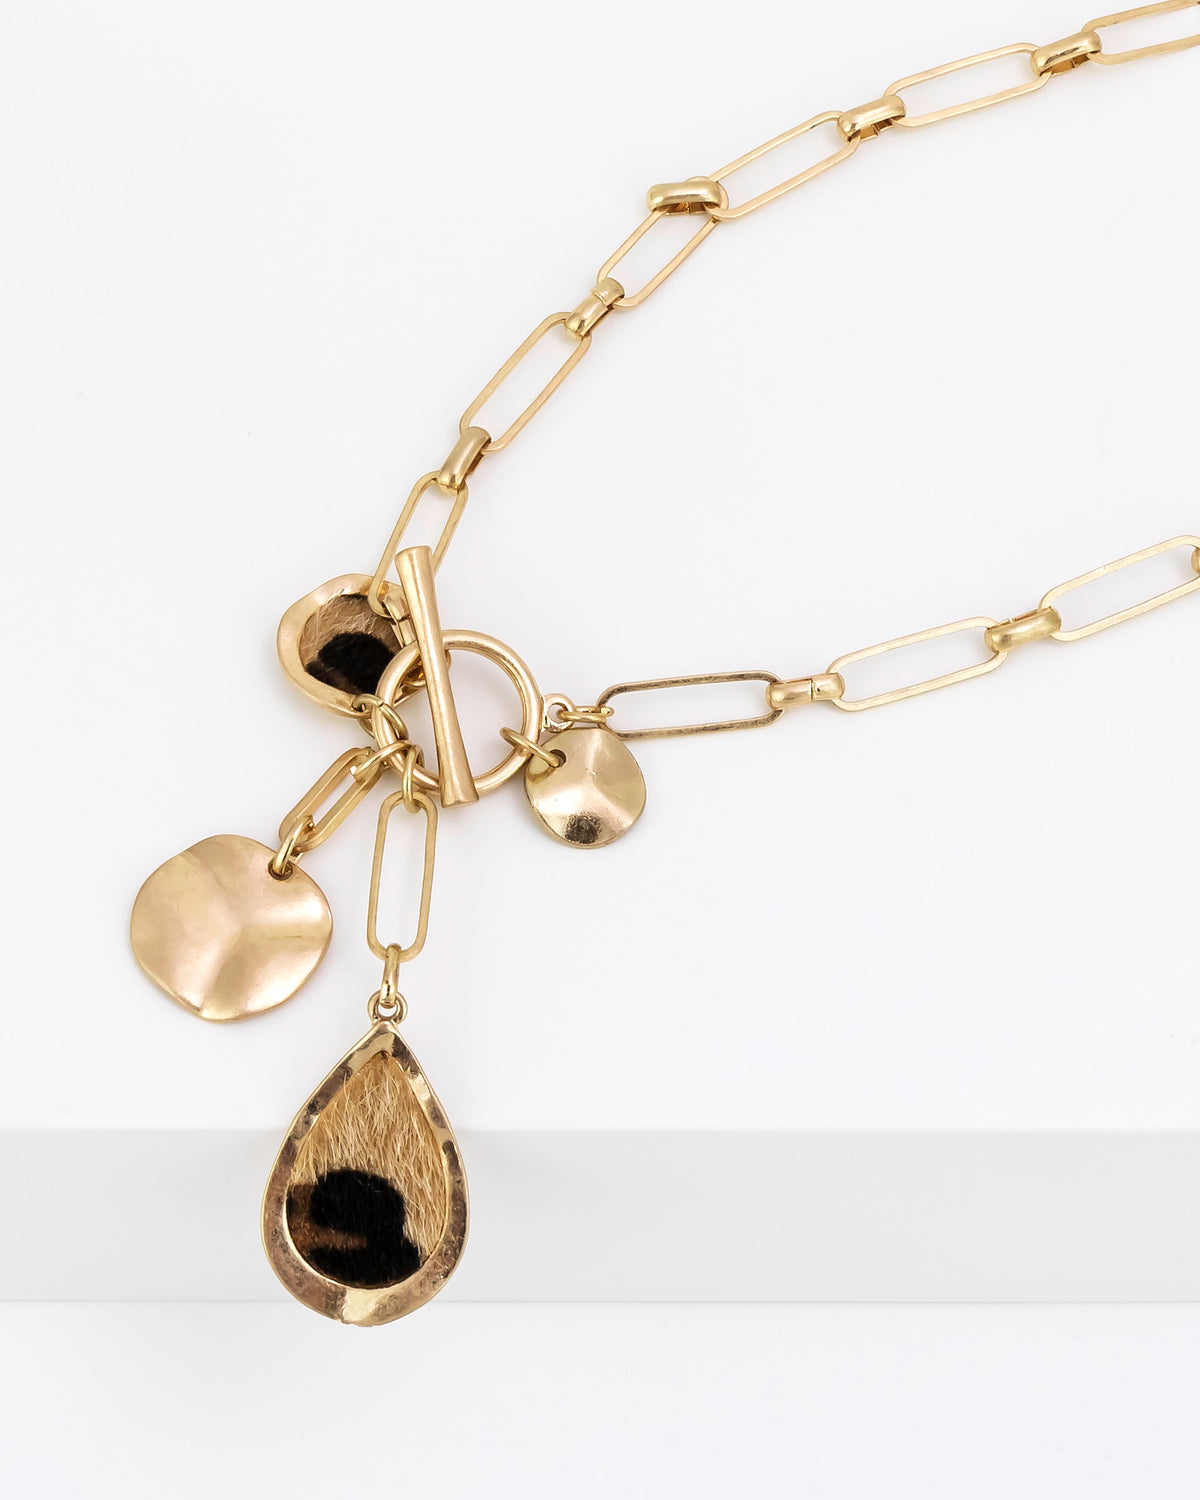 Dauplaise Jewelry - The Serengeti Shaky Toggle Necklace